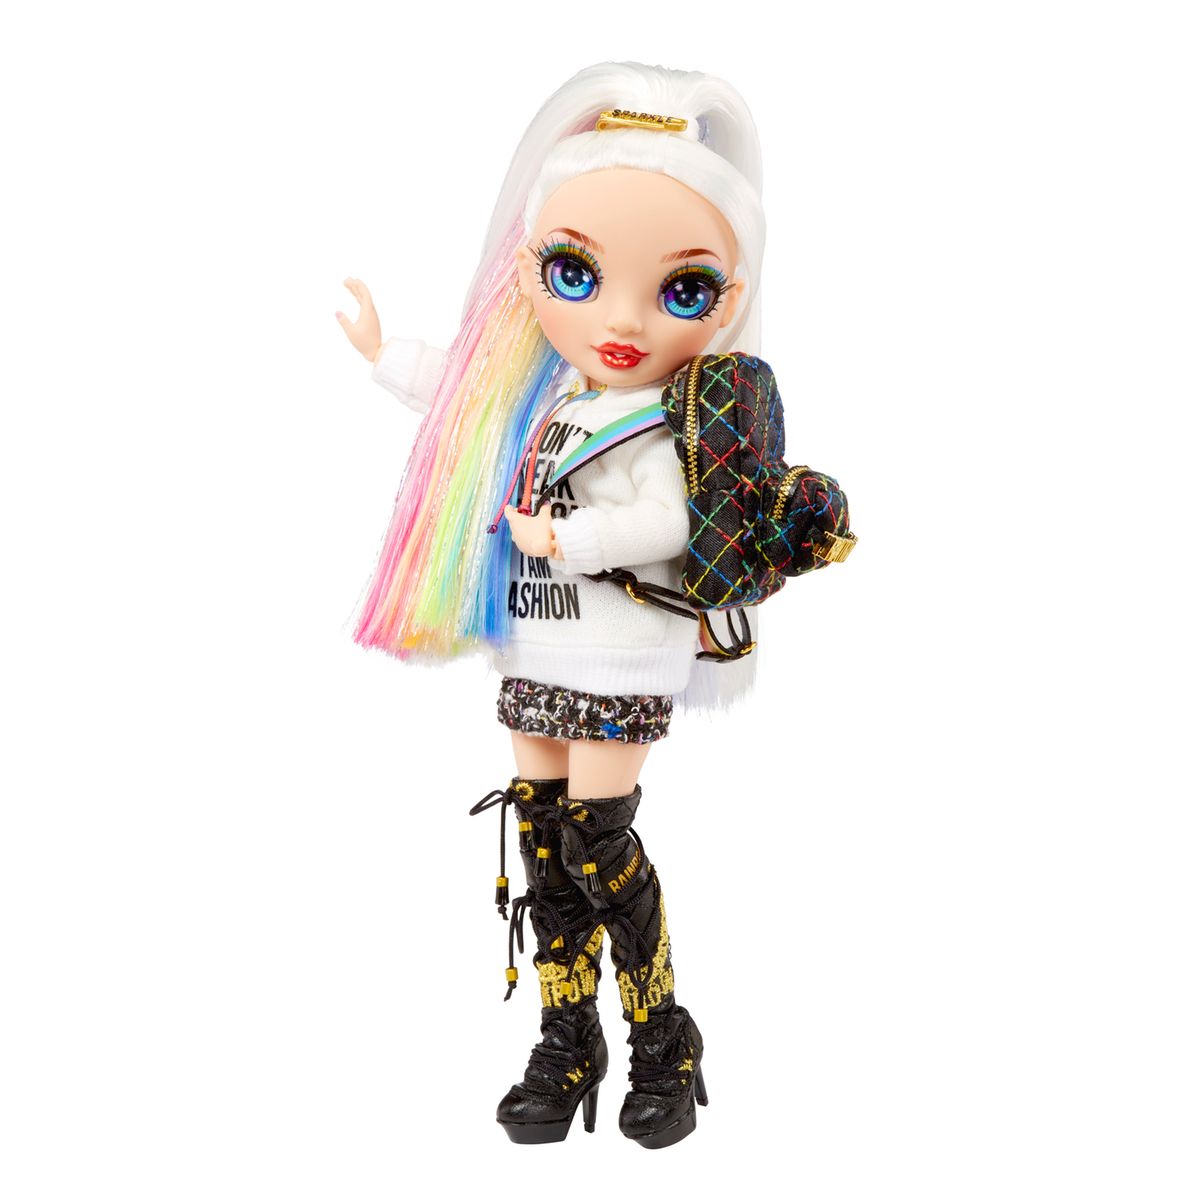 Rainbow high core fashion doll s4- meena fleur saffron Zapf